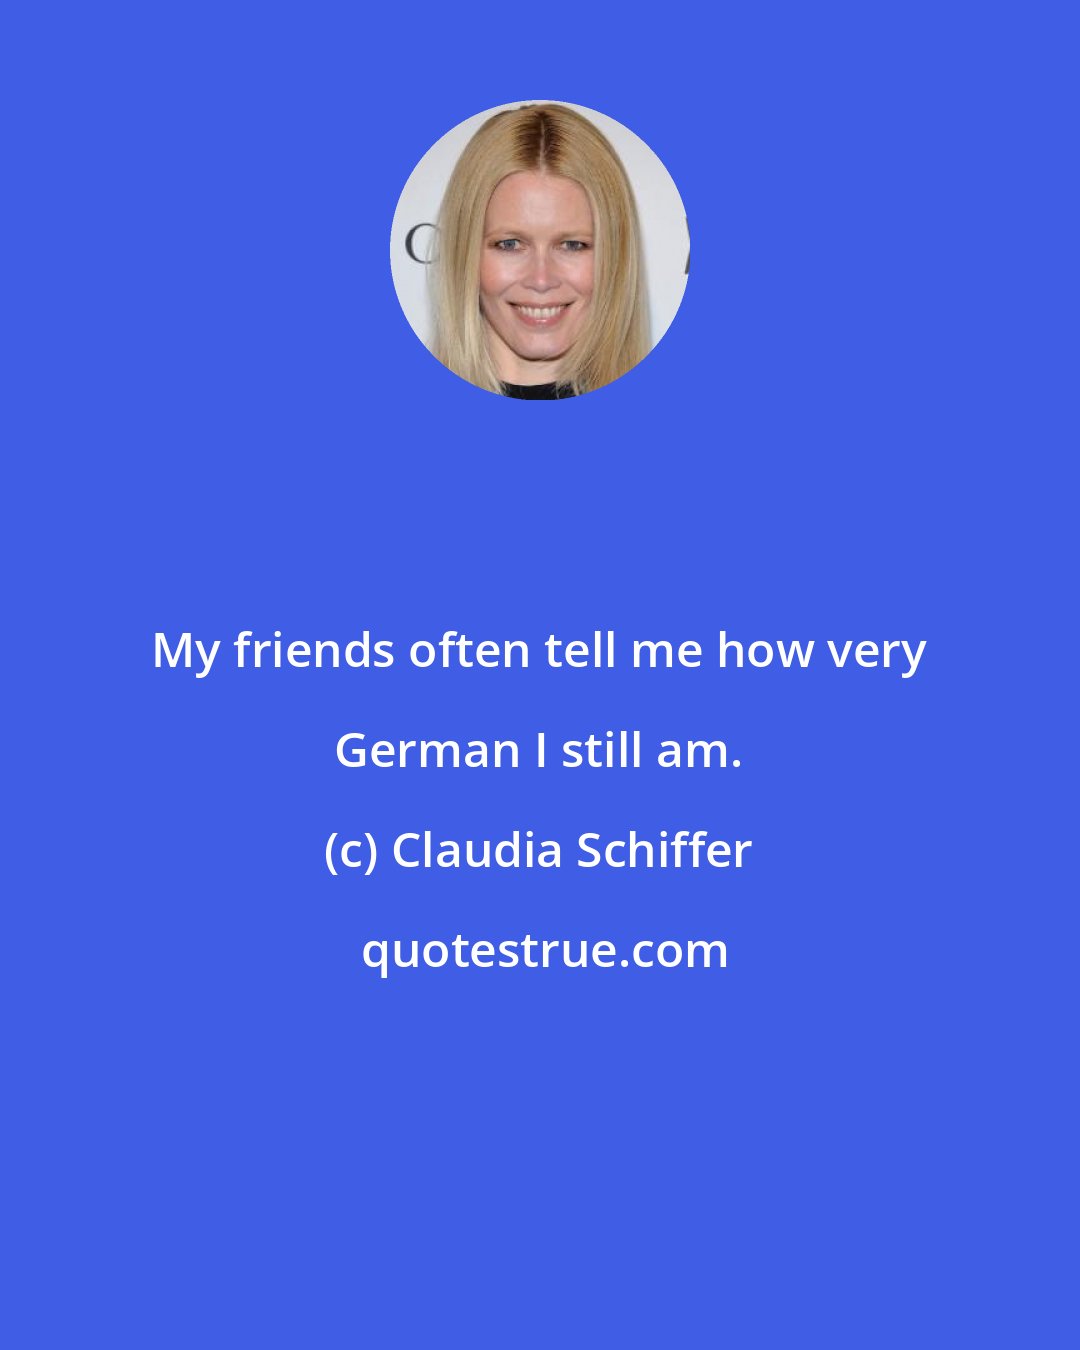 Claudia Schiffer: My friends often tell me how very German I still am.